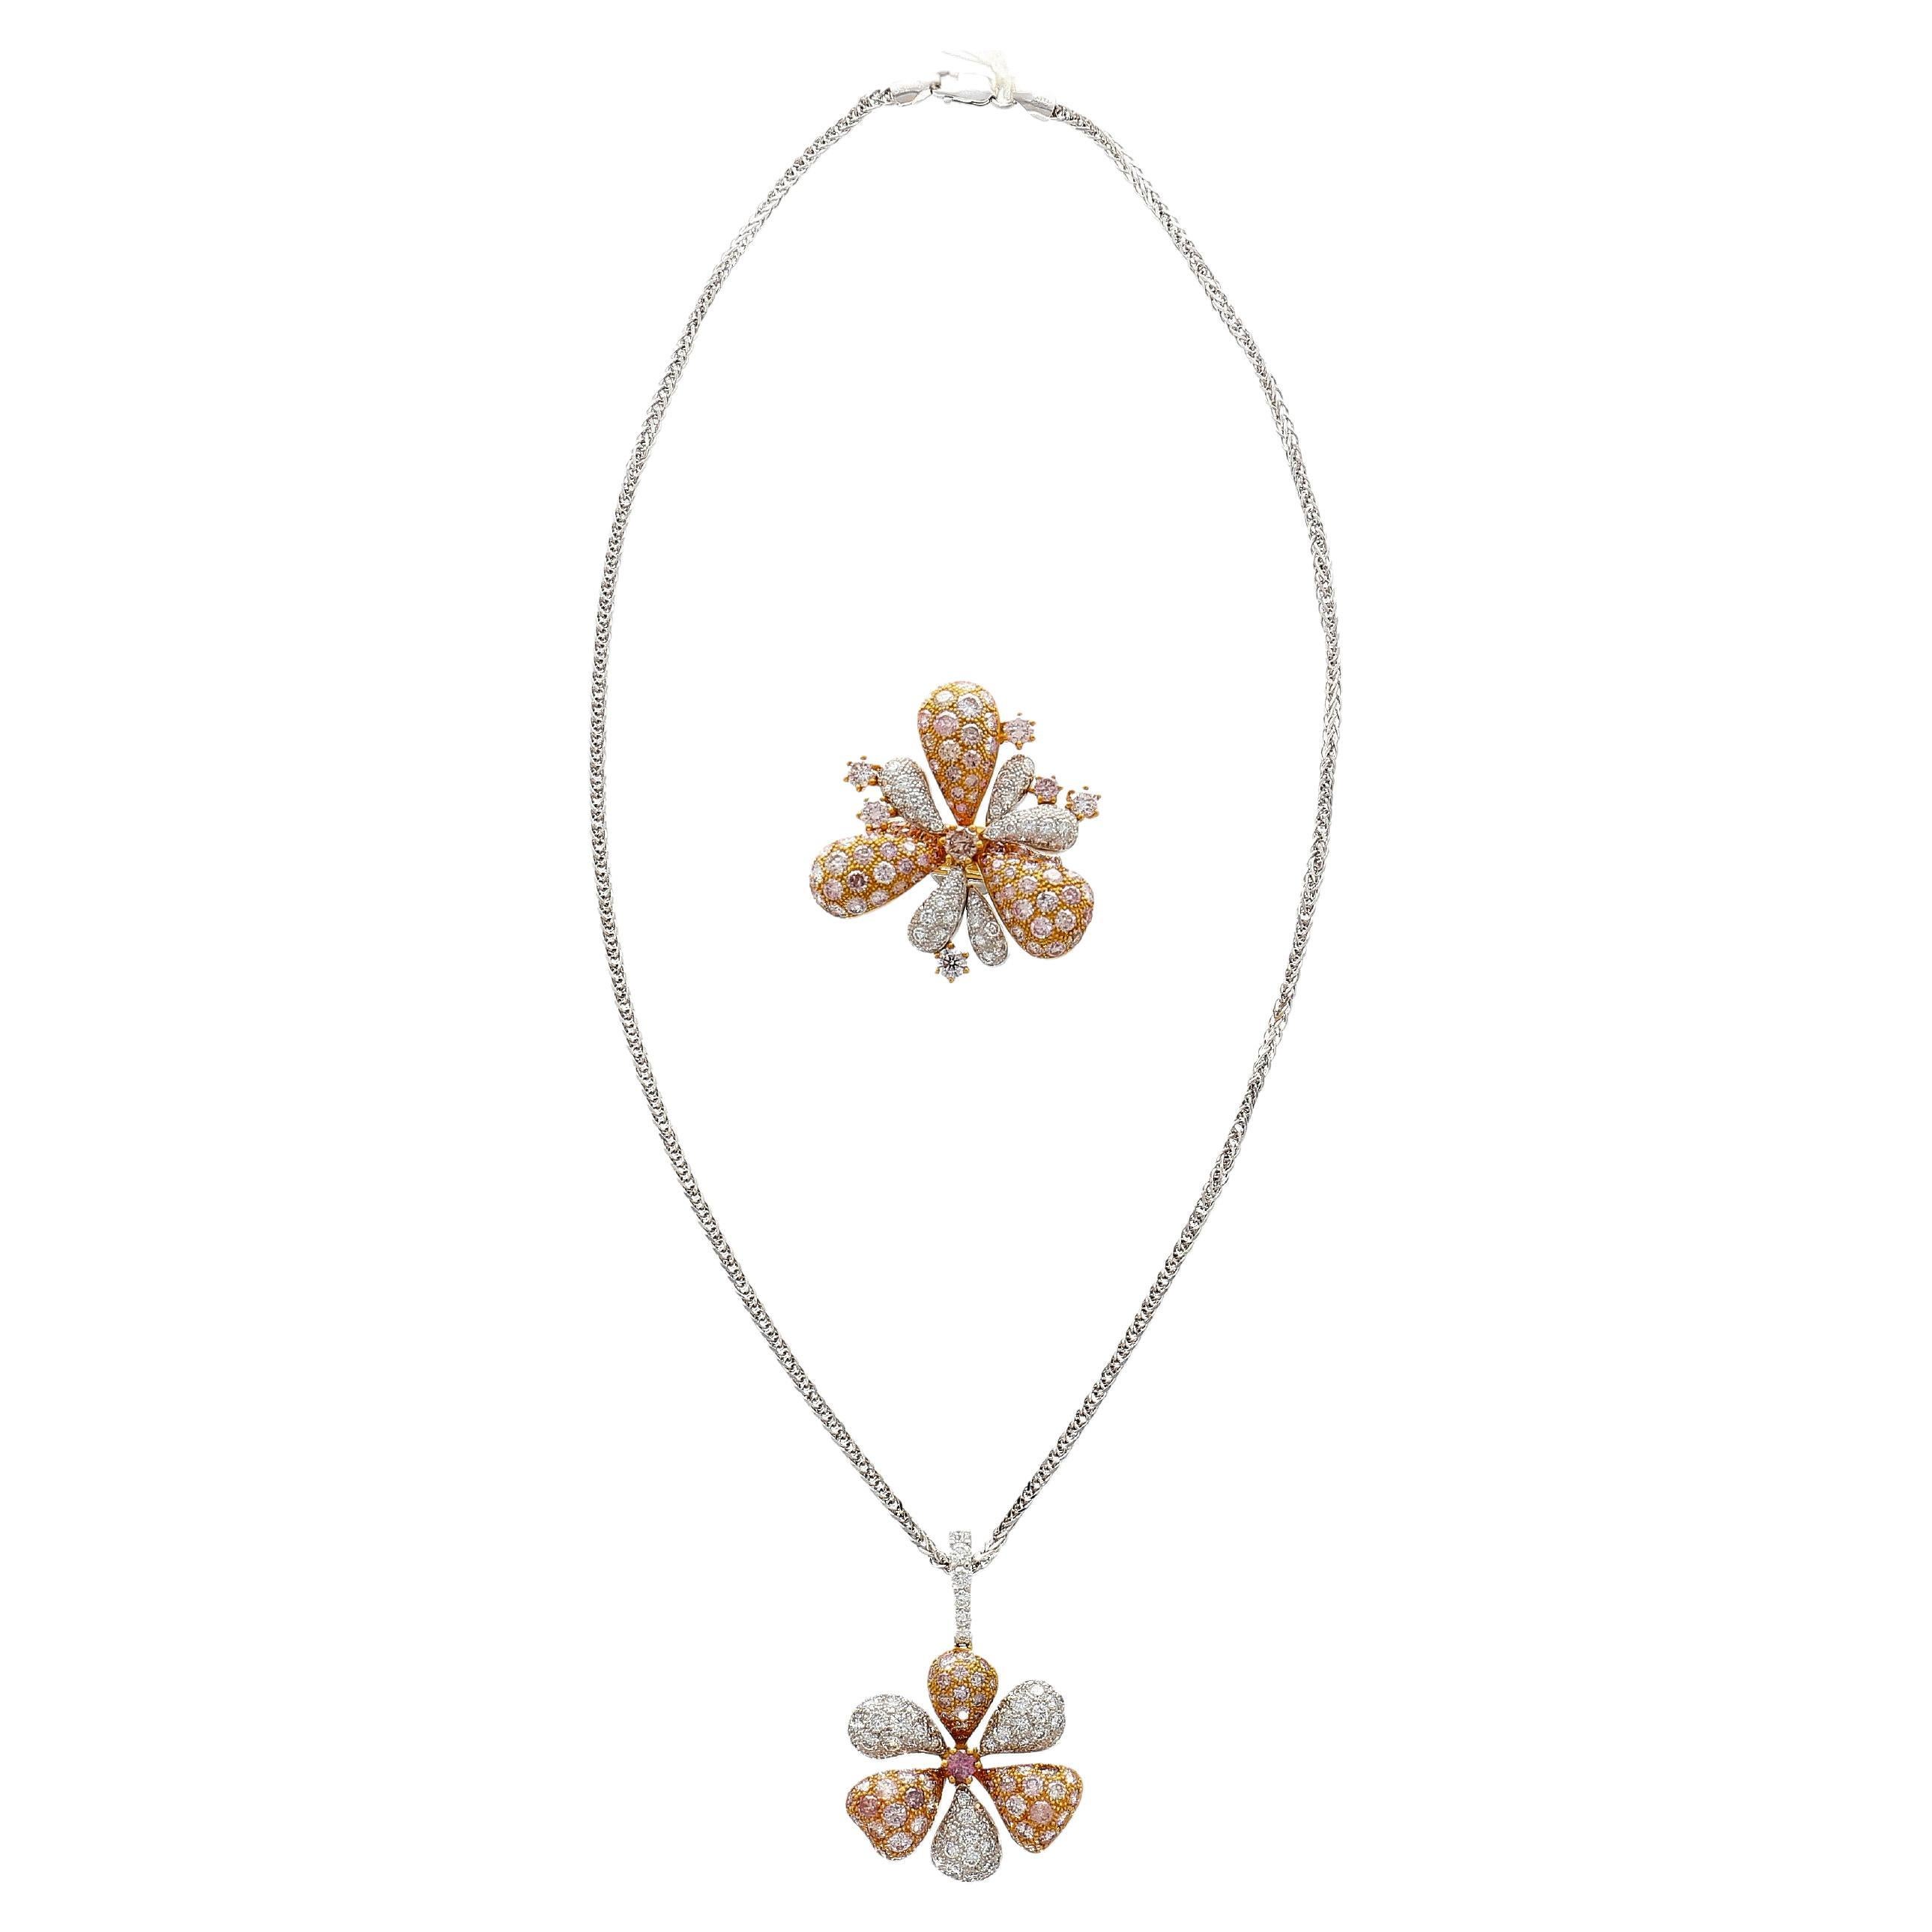 11.9 Carat Pink Diamond Pendant Necklace & Ring Flower Motif Jewelry Set